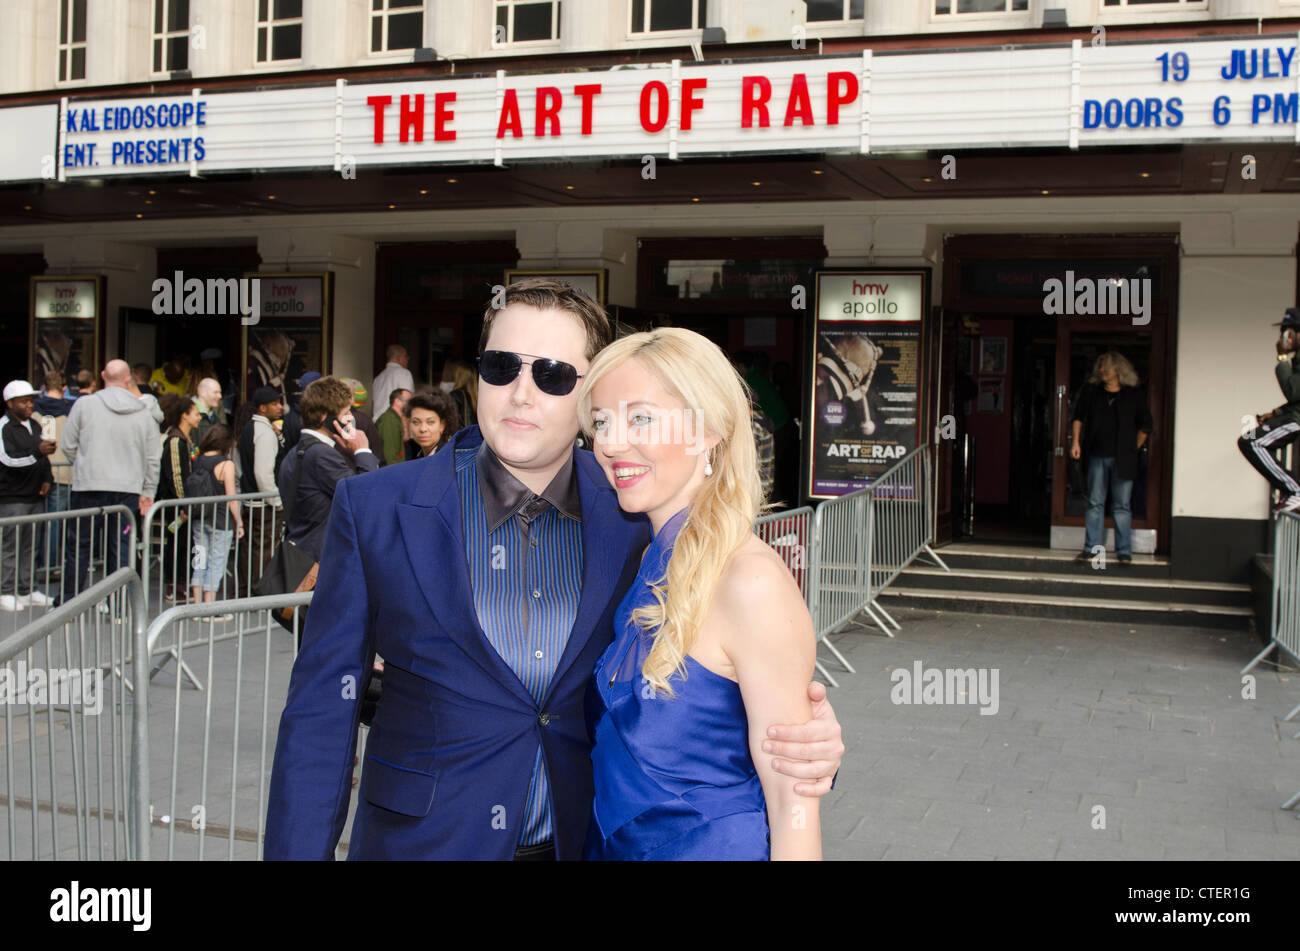 Robin John Gibb and girlfriend attend The Art of Rap film premiere Hammersmith Apollo, London  Uk Stock Photo